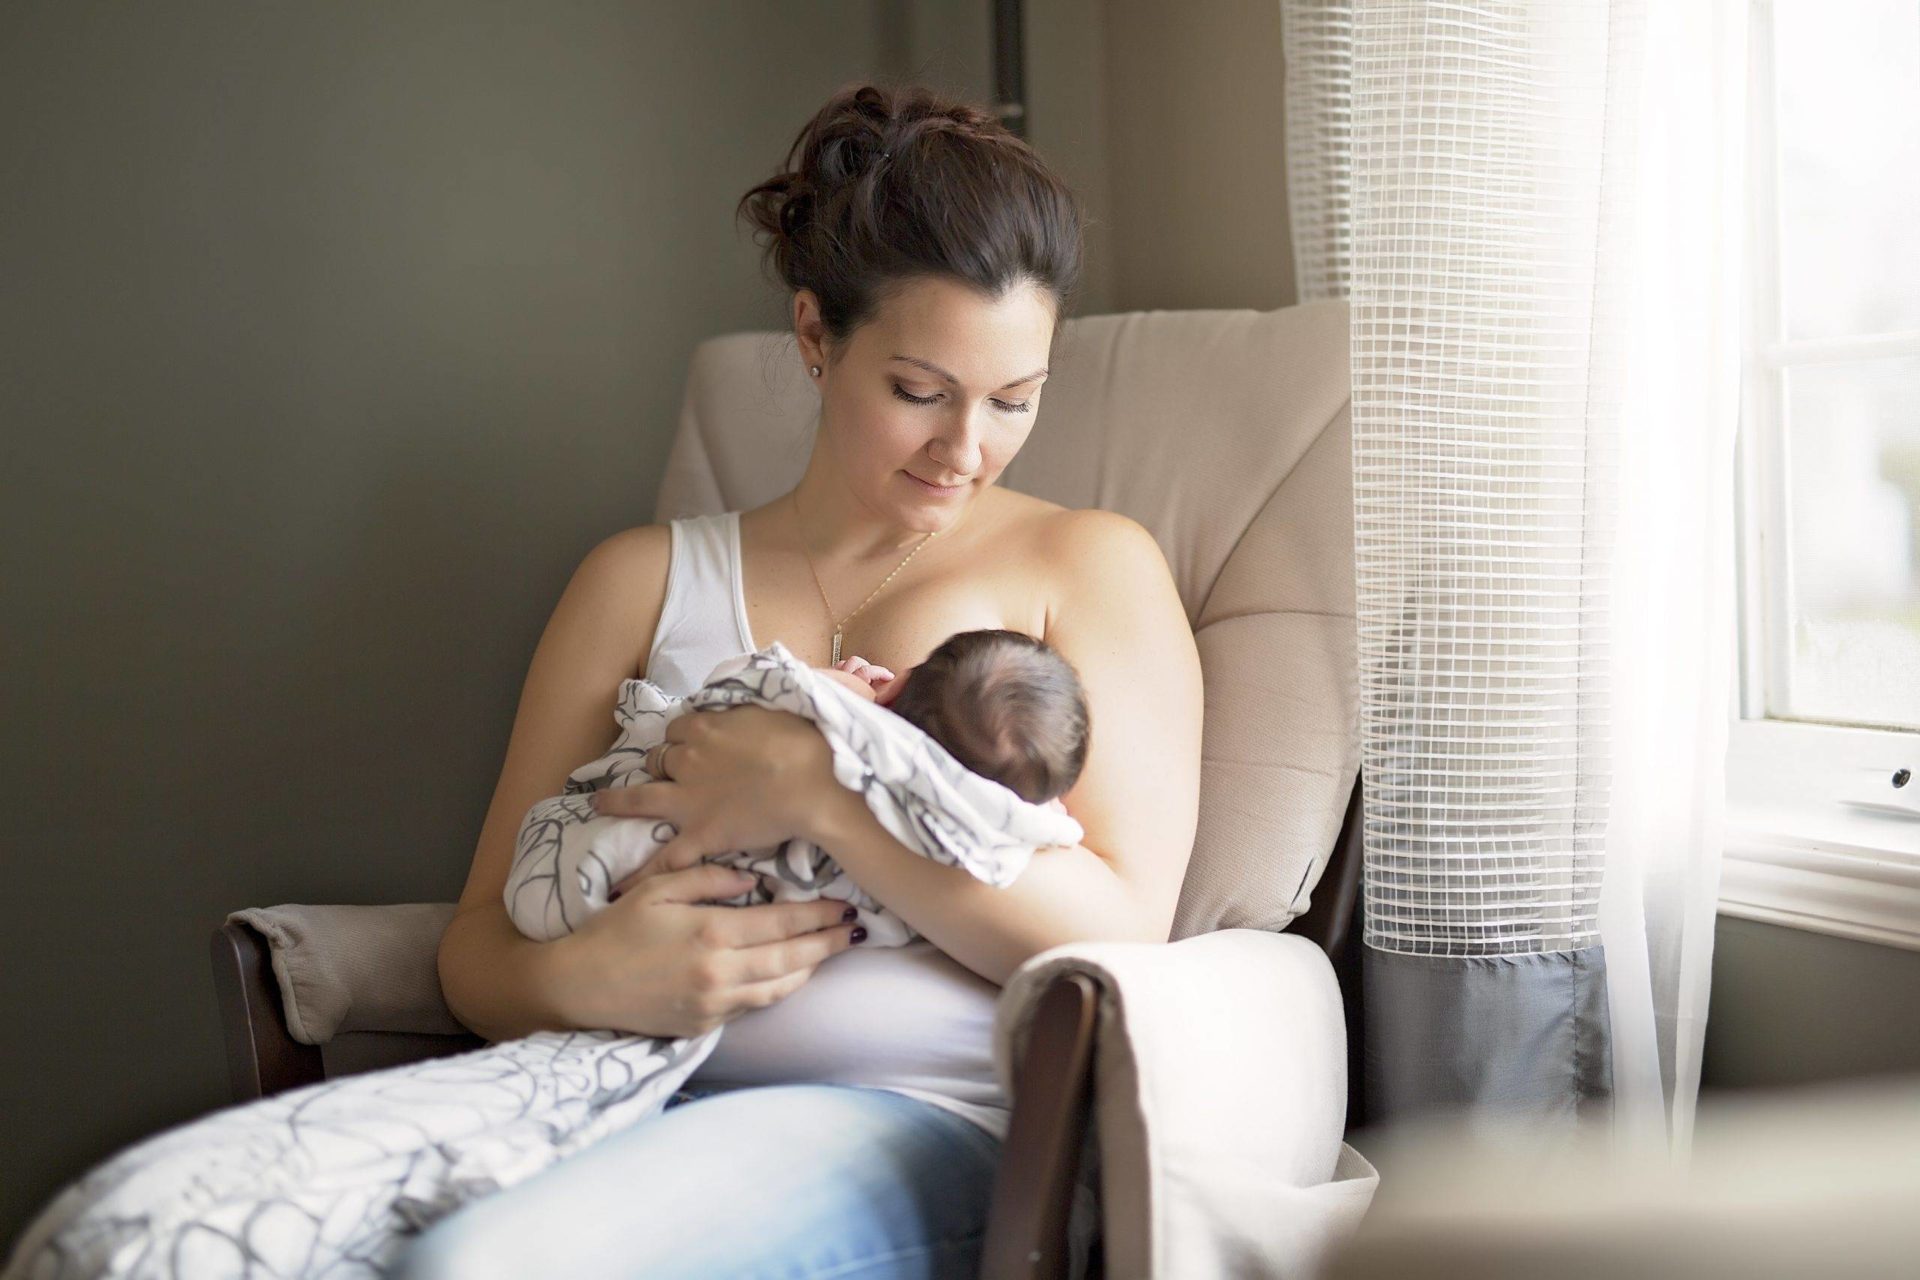 When breastfeeding